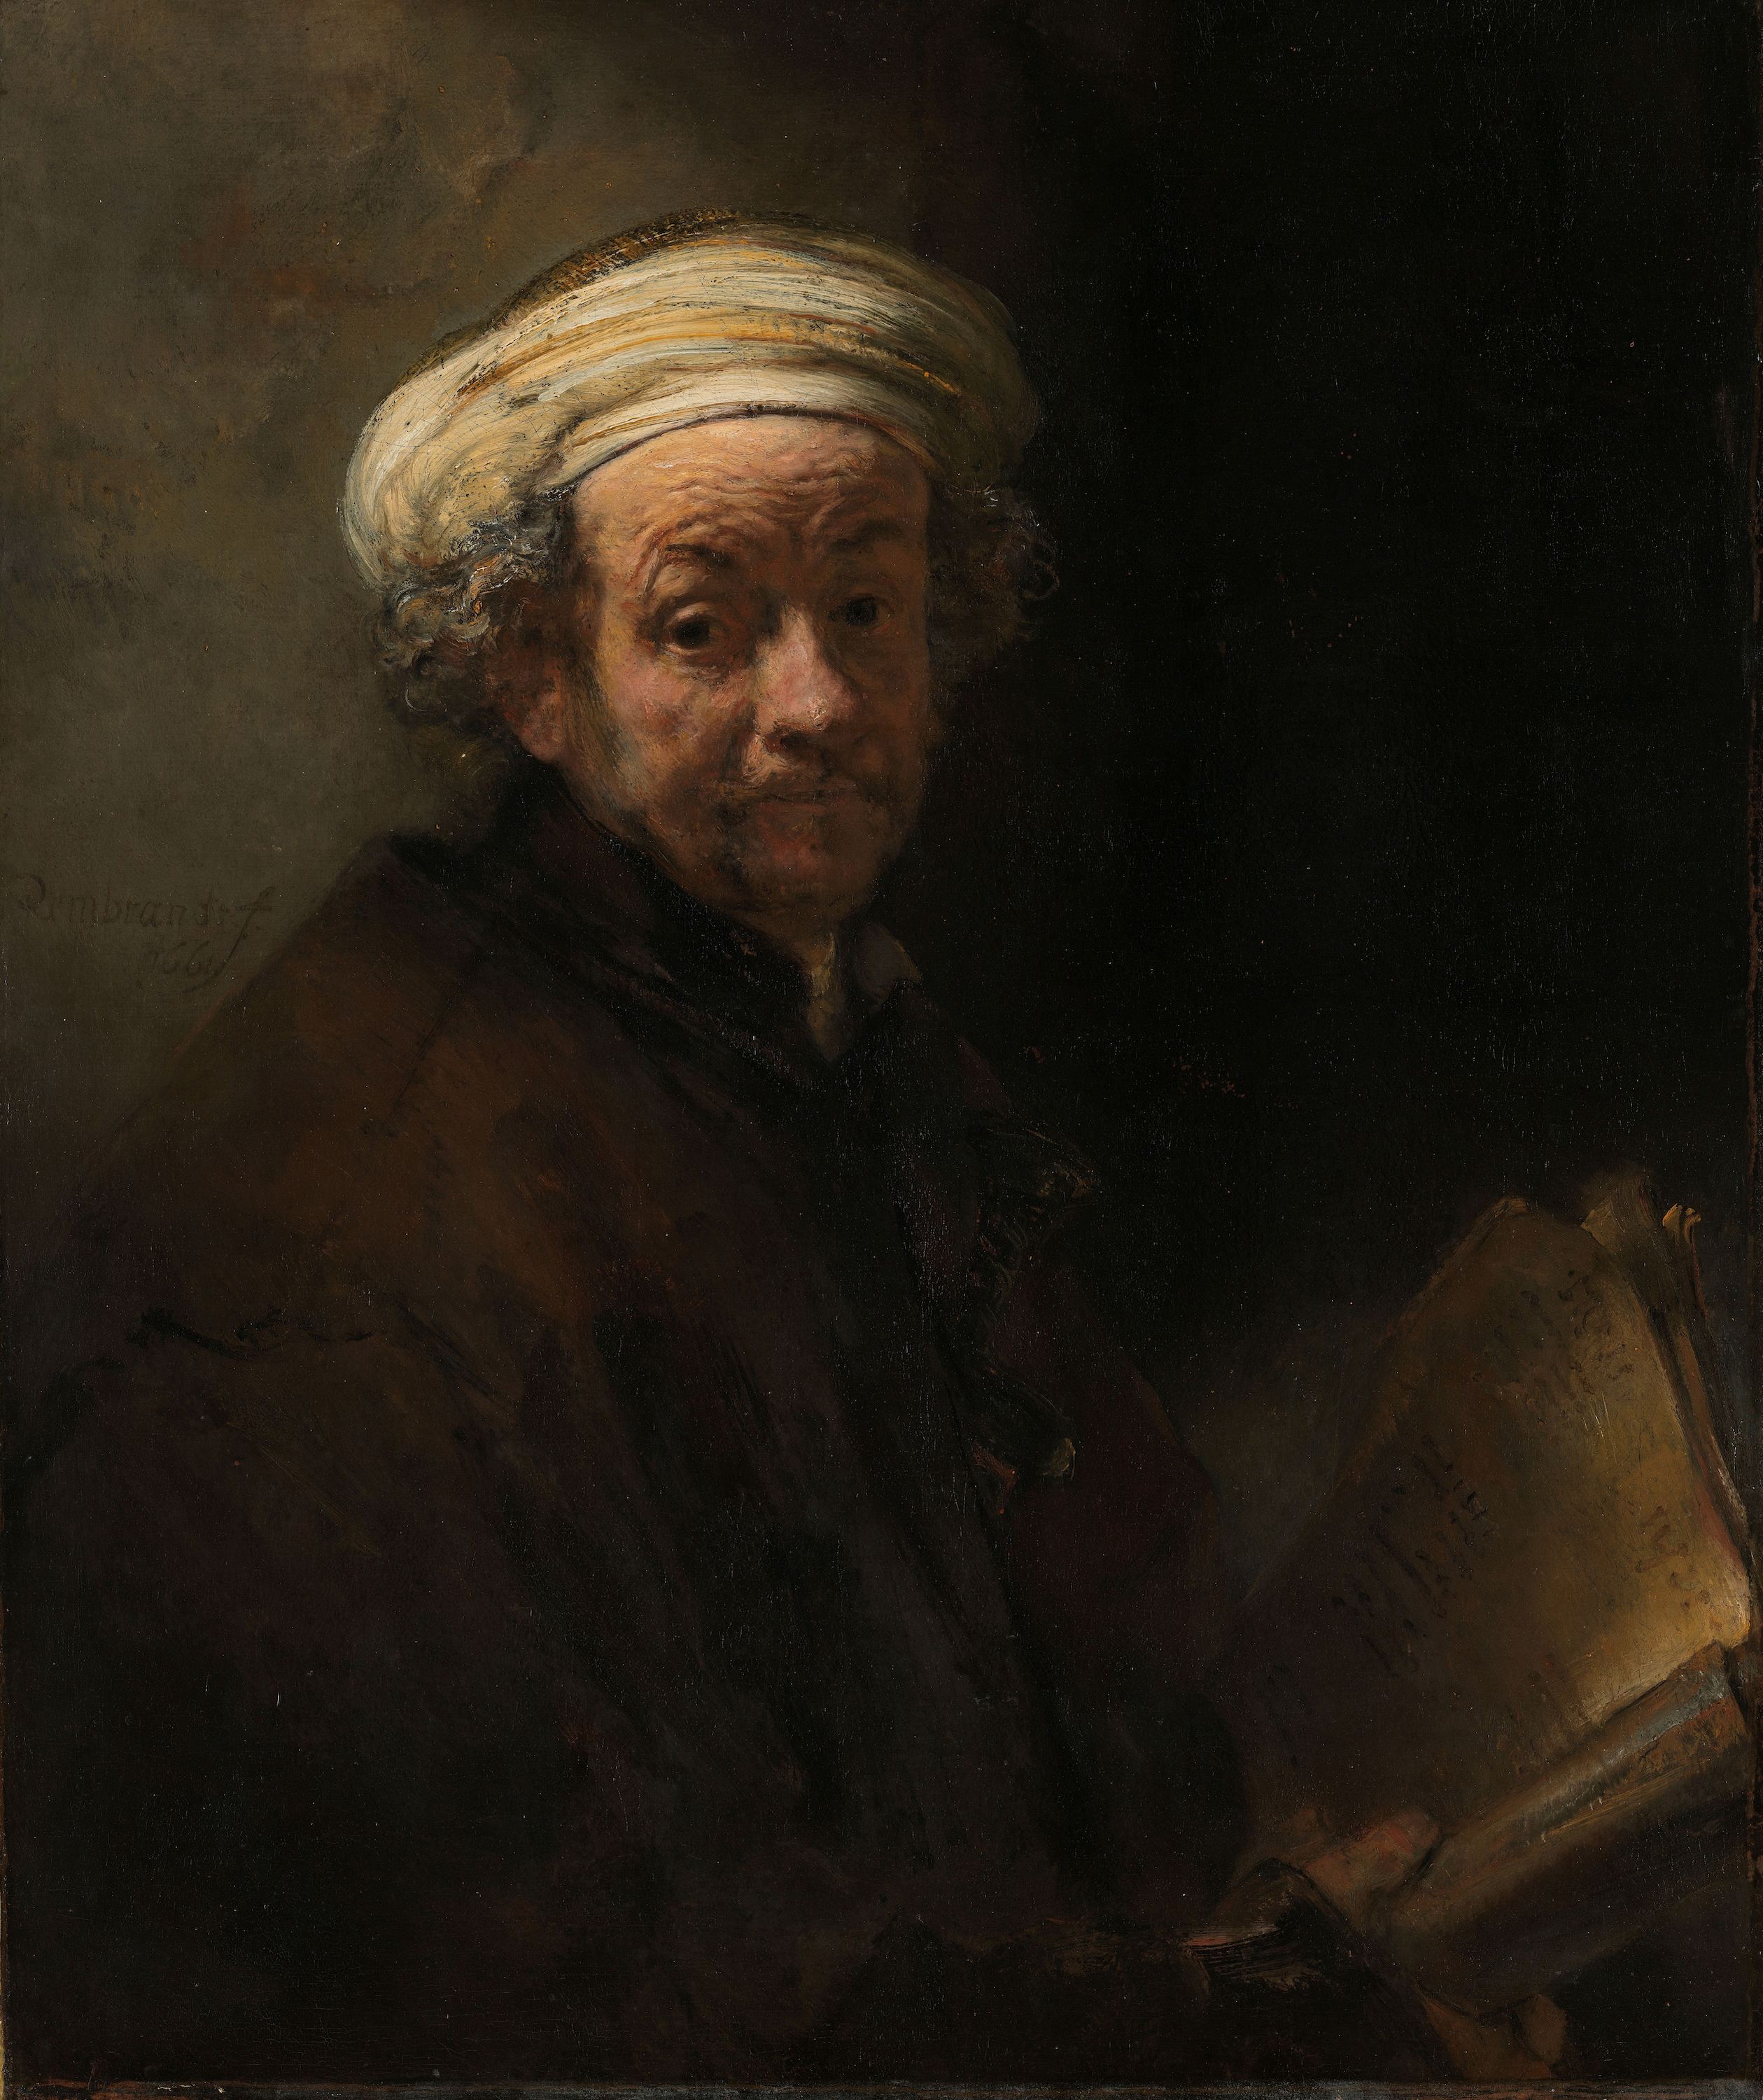 Автопортрет в качестве апостола Павла (Self-portrait as the Apostle Paul) by Rembrandt van Rijn - 1661 - 91 × 77 см 